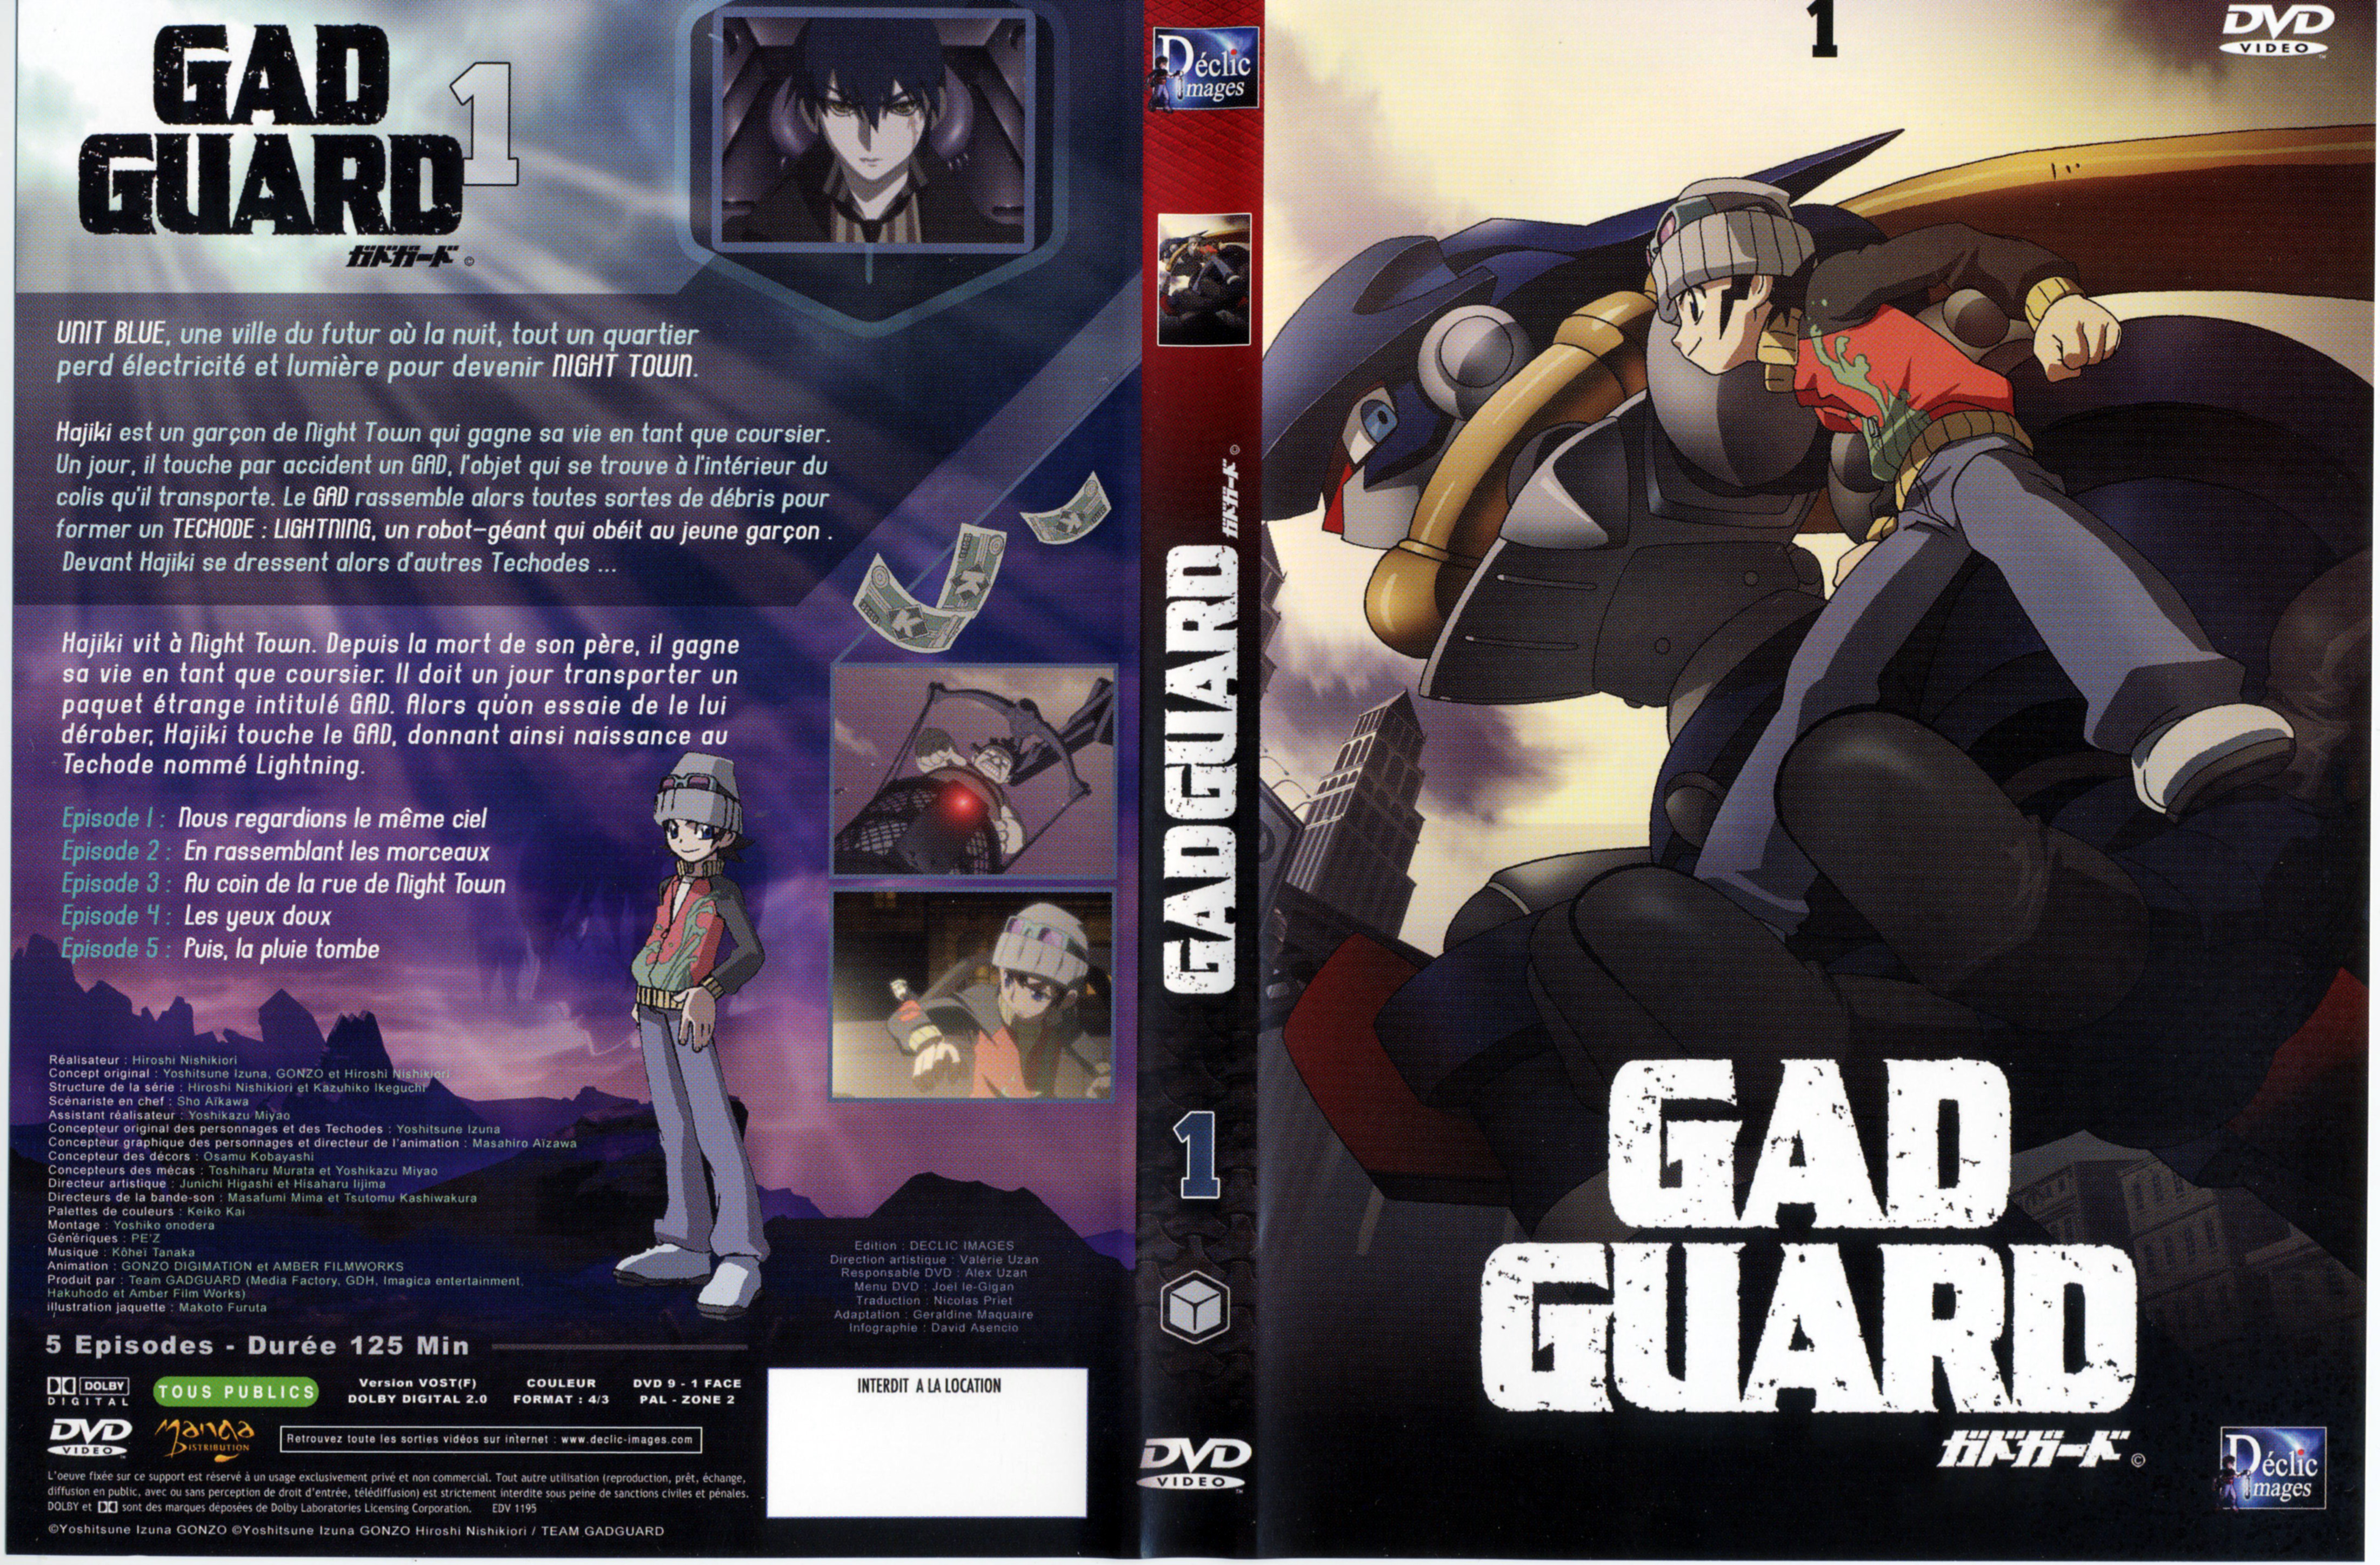 Jaquette DVD Gad Guard DVD 1